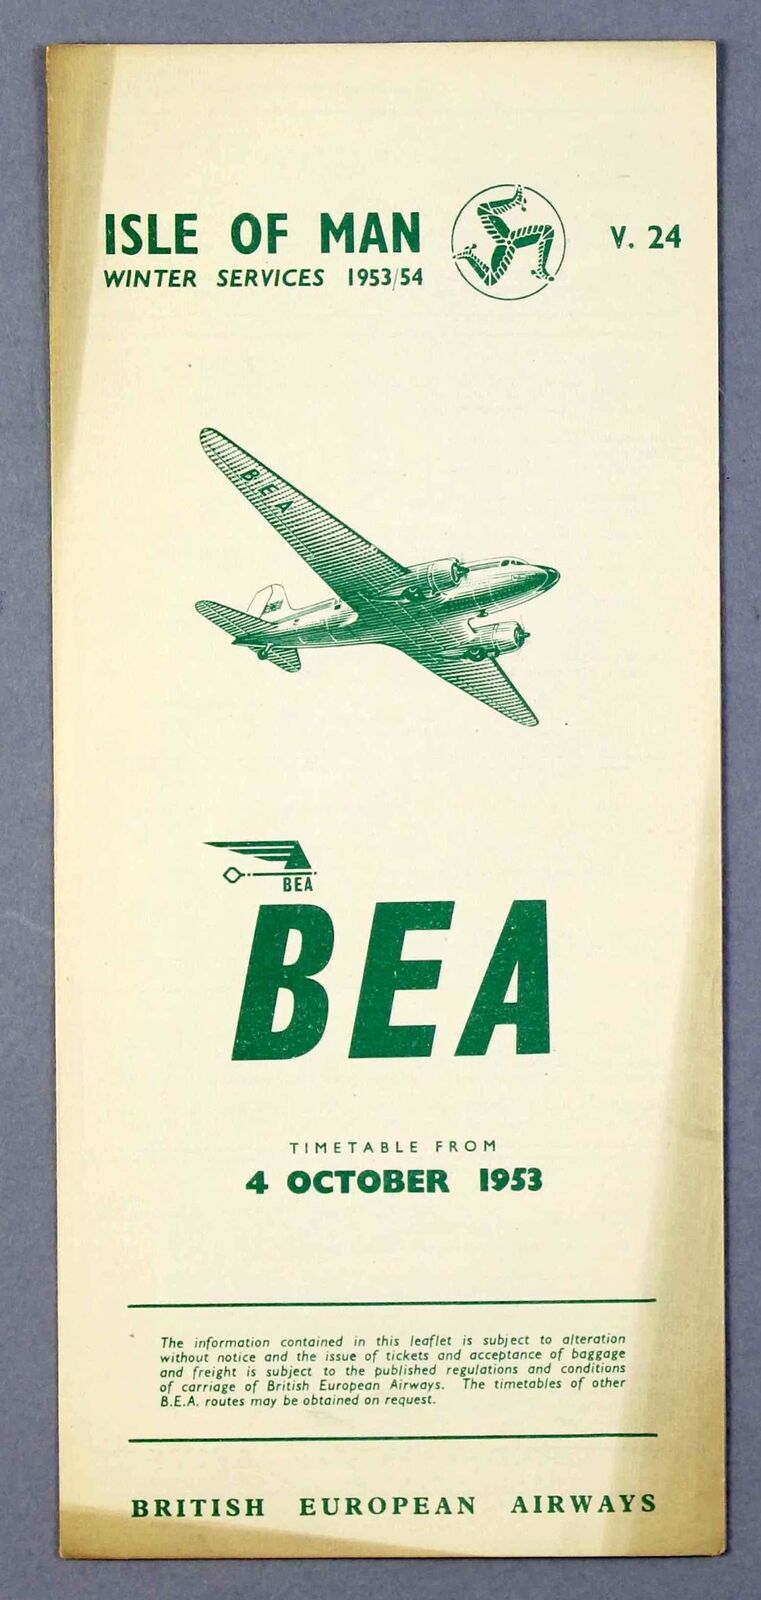 BEA BRITISH EUROPEAN AIRWAYS ISLE OF MAN AIRLINE TIMETABLE WINTER 1953/54 IOM